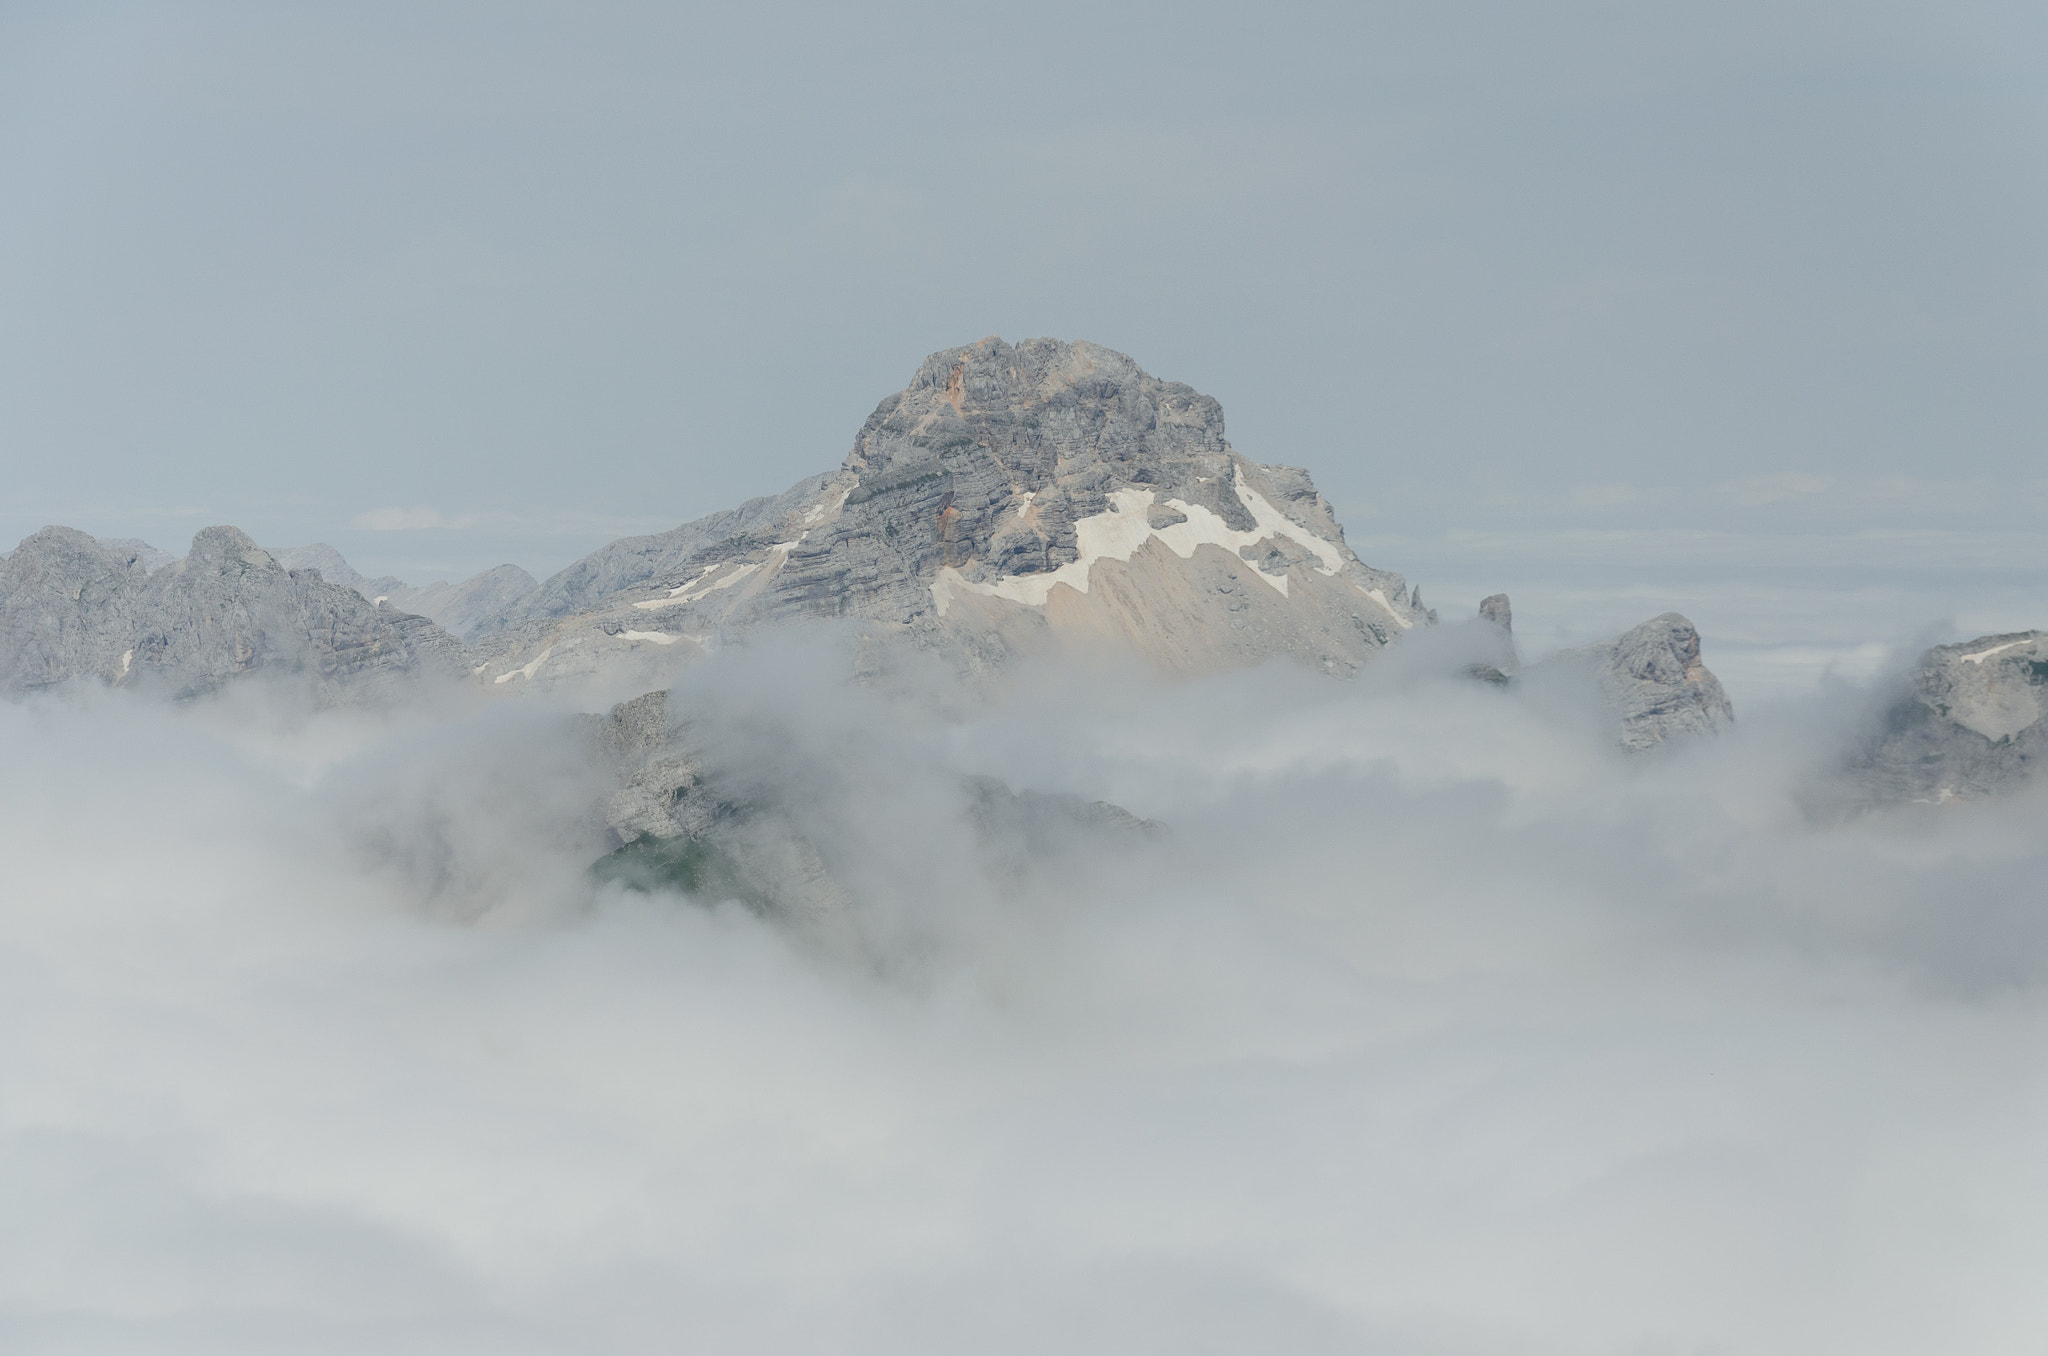 Mangart floating above the clouds in Triglav national park